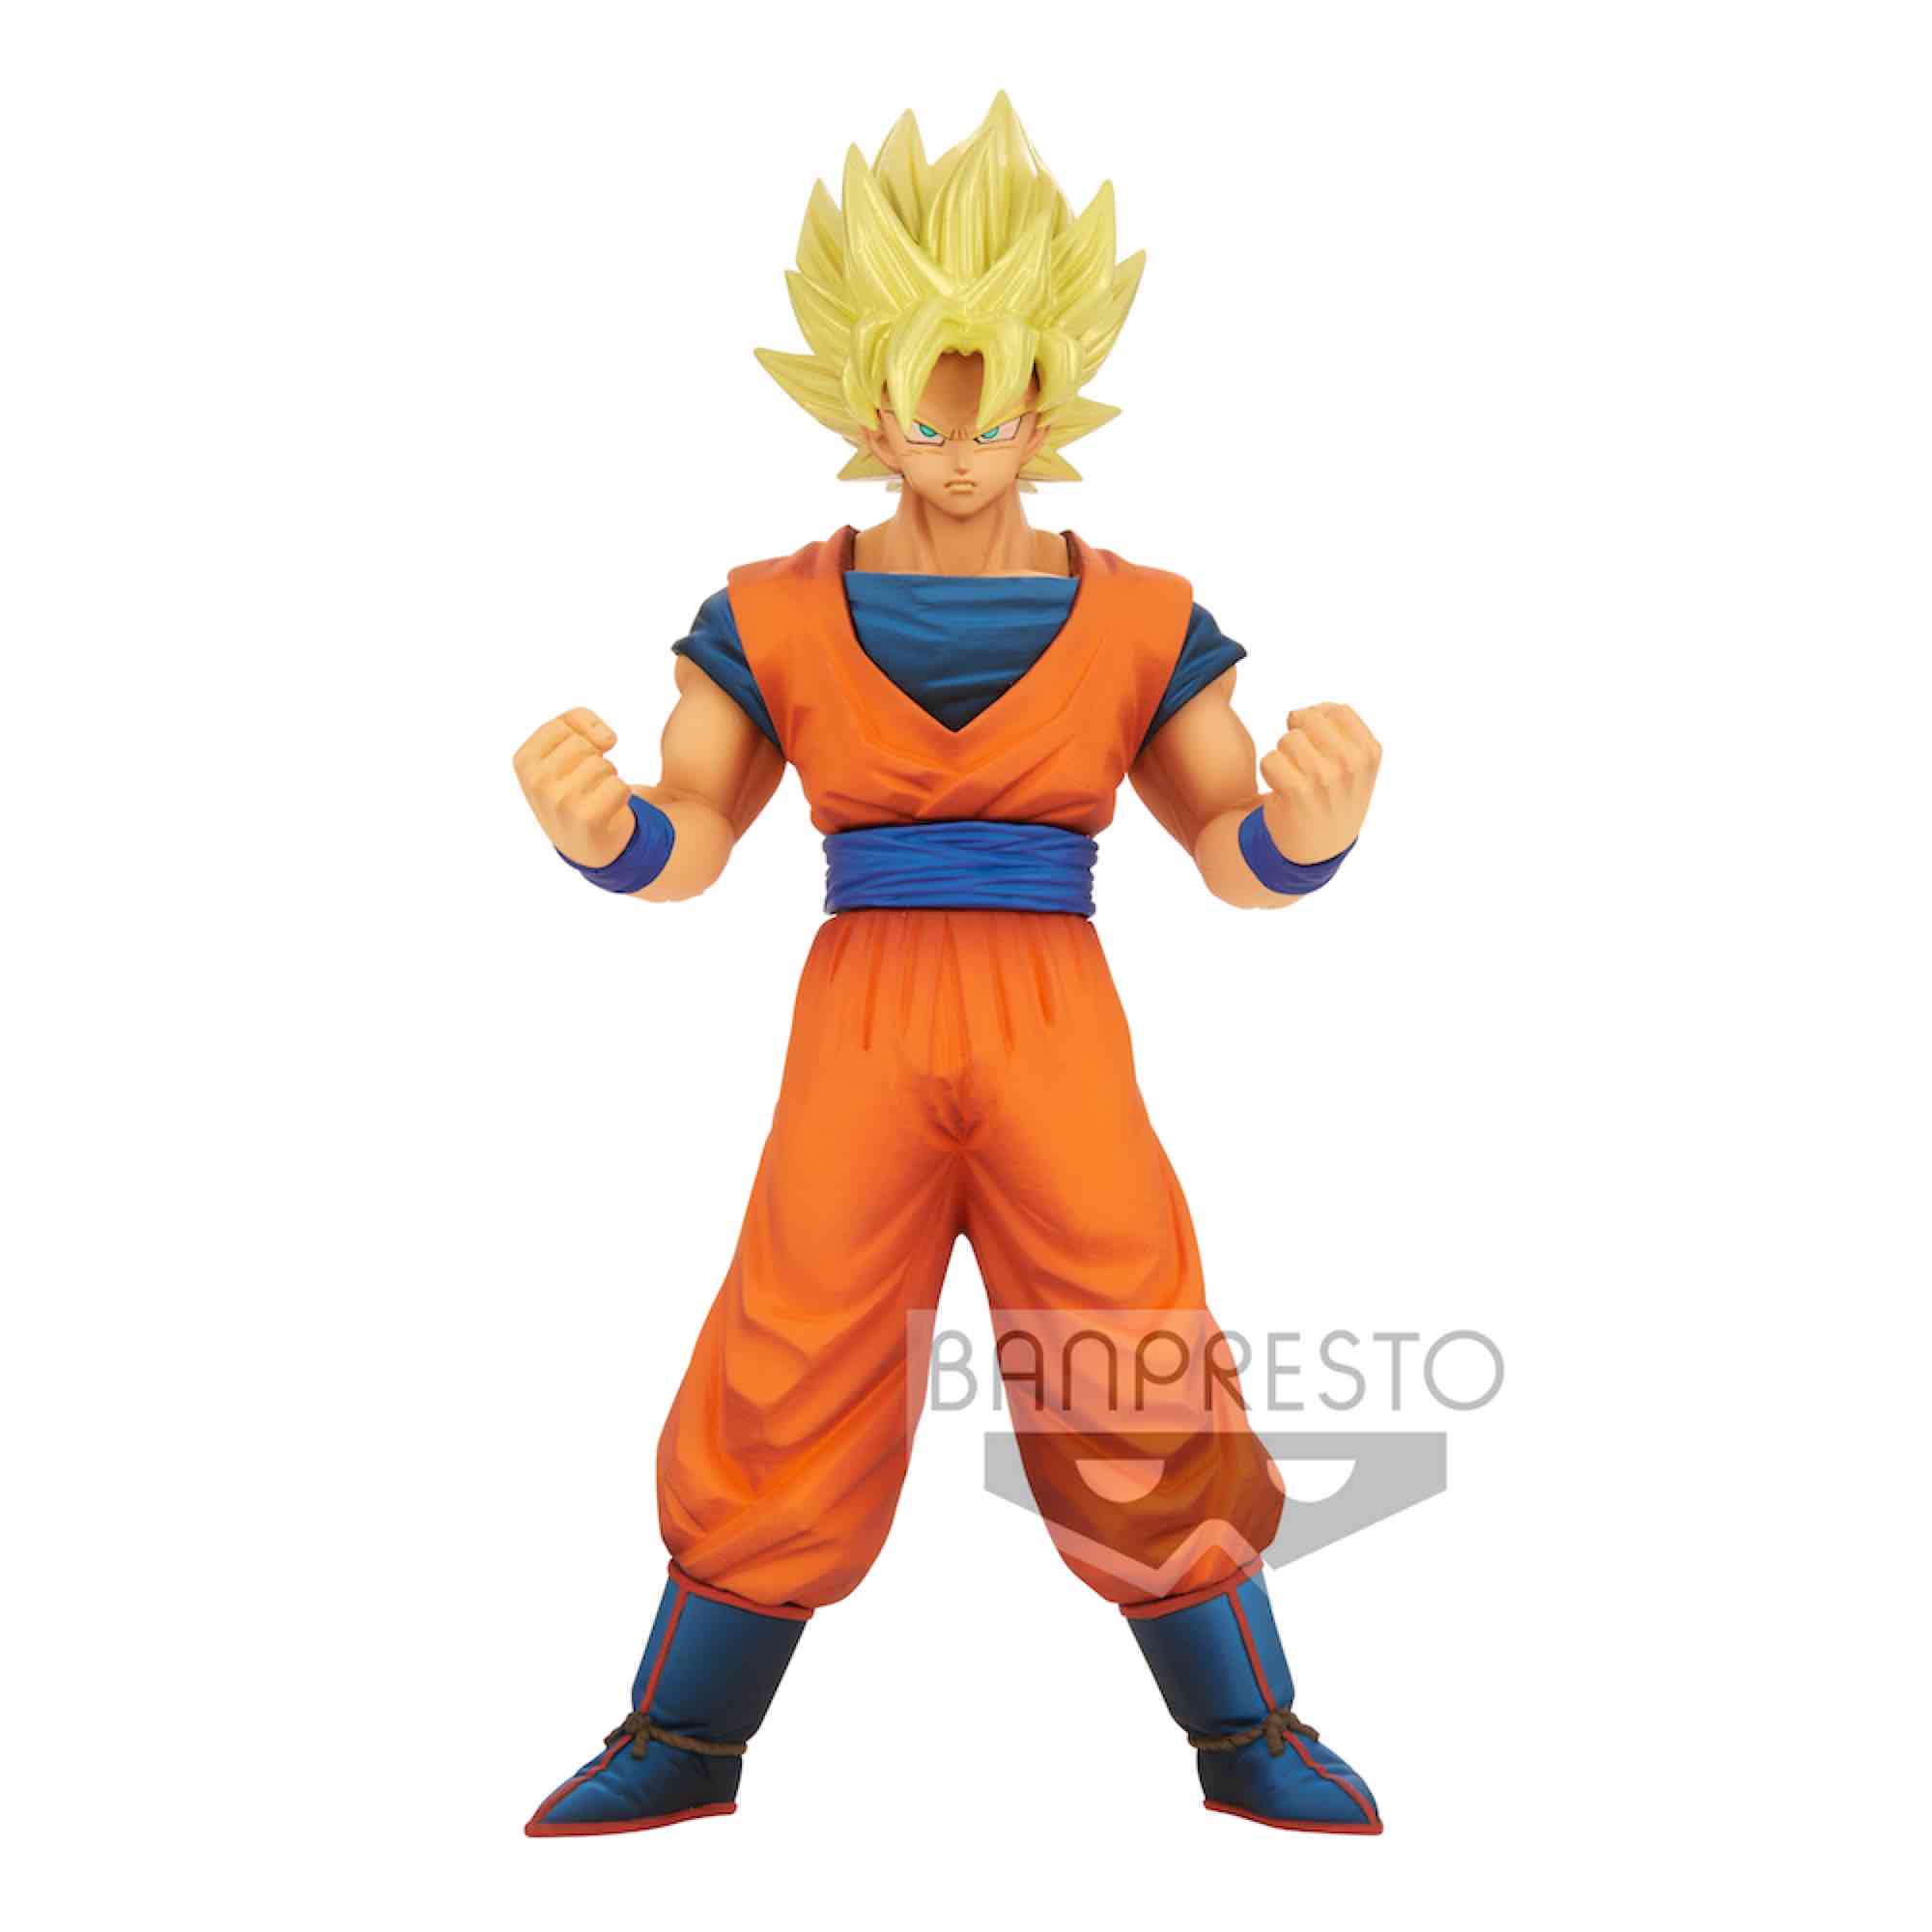 Banpresto - Estatueta DBZ - Son Goku Super Saiyajin Super Master Stars  Piece Diorama 20 cm - 3296580262298